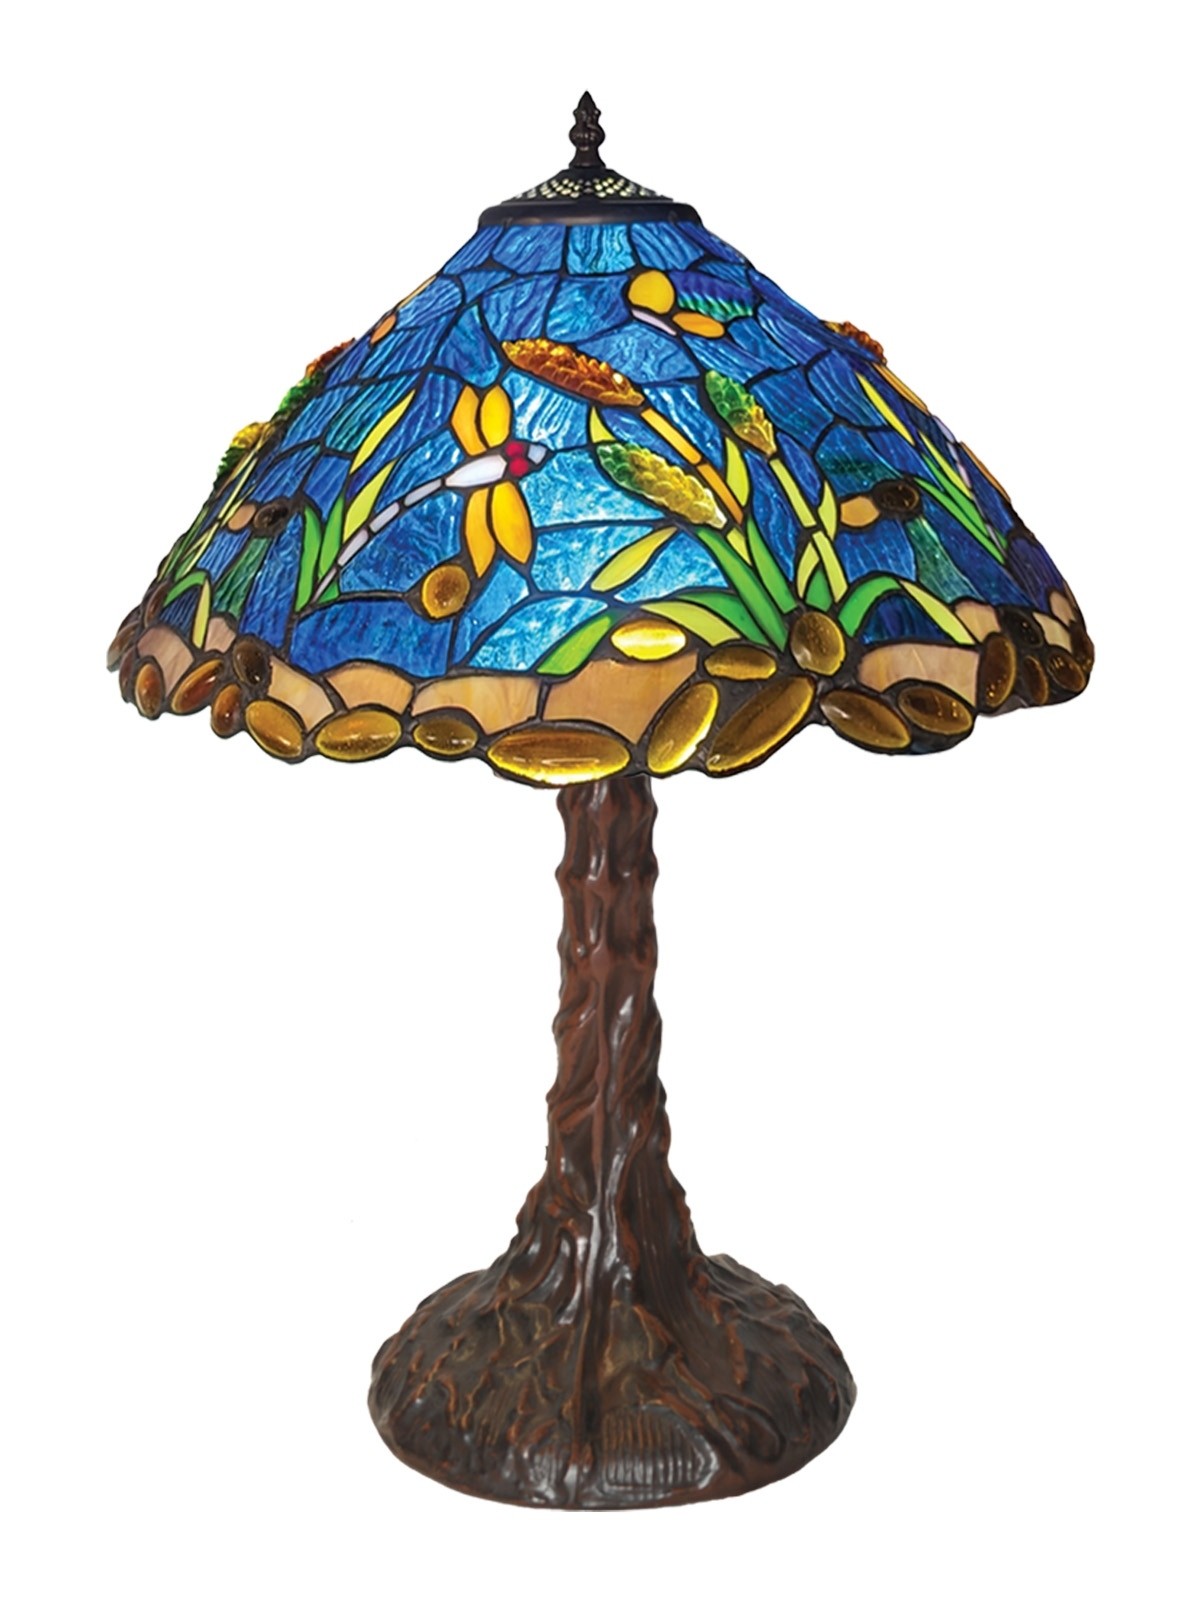 Riverbank and Dragonfly Tiffany Table Lamp (Medium) 43cm